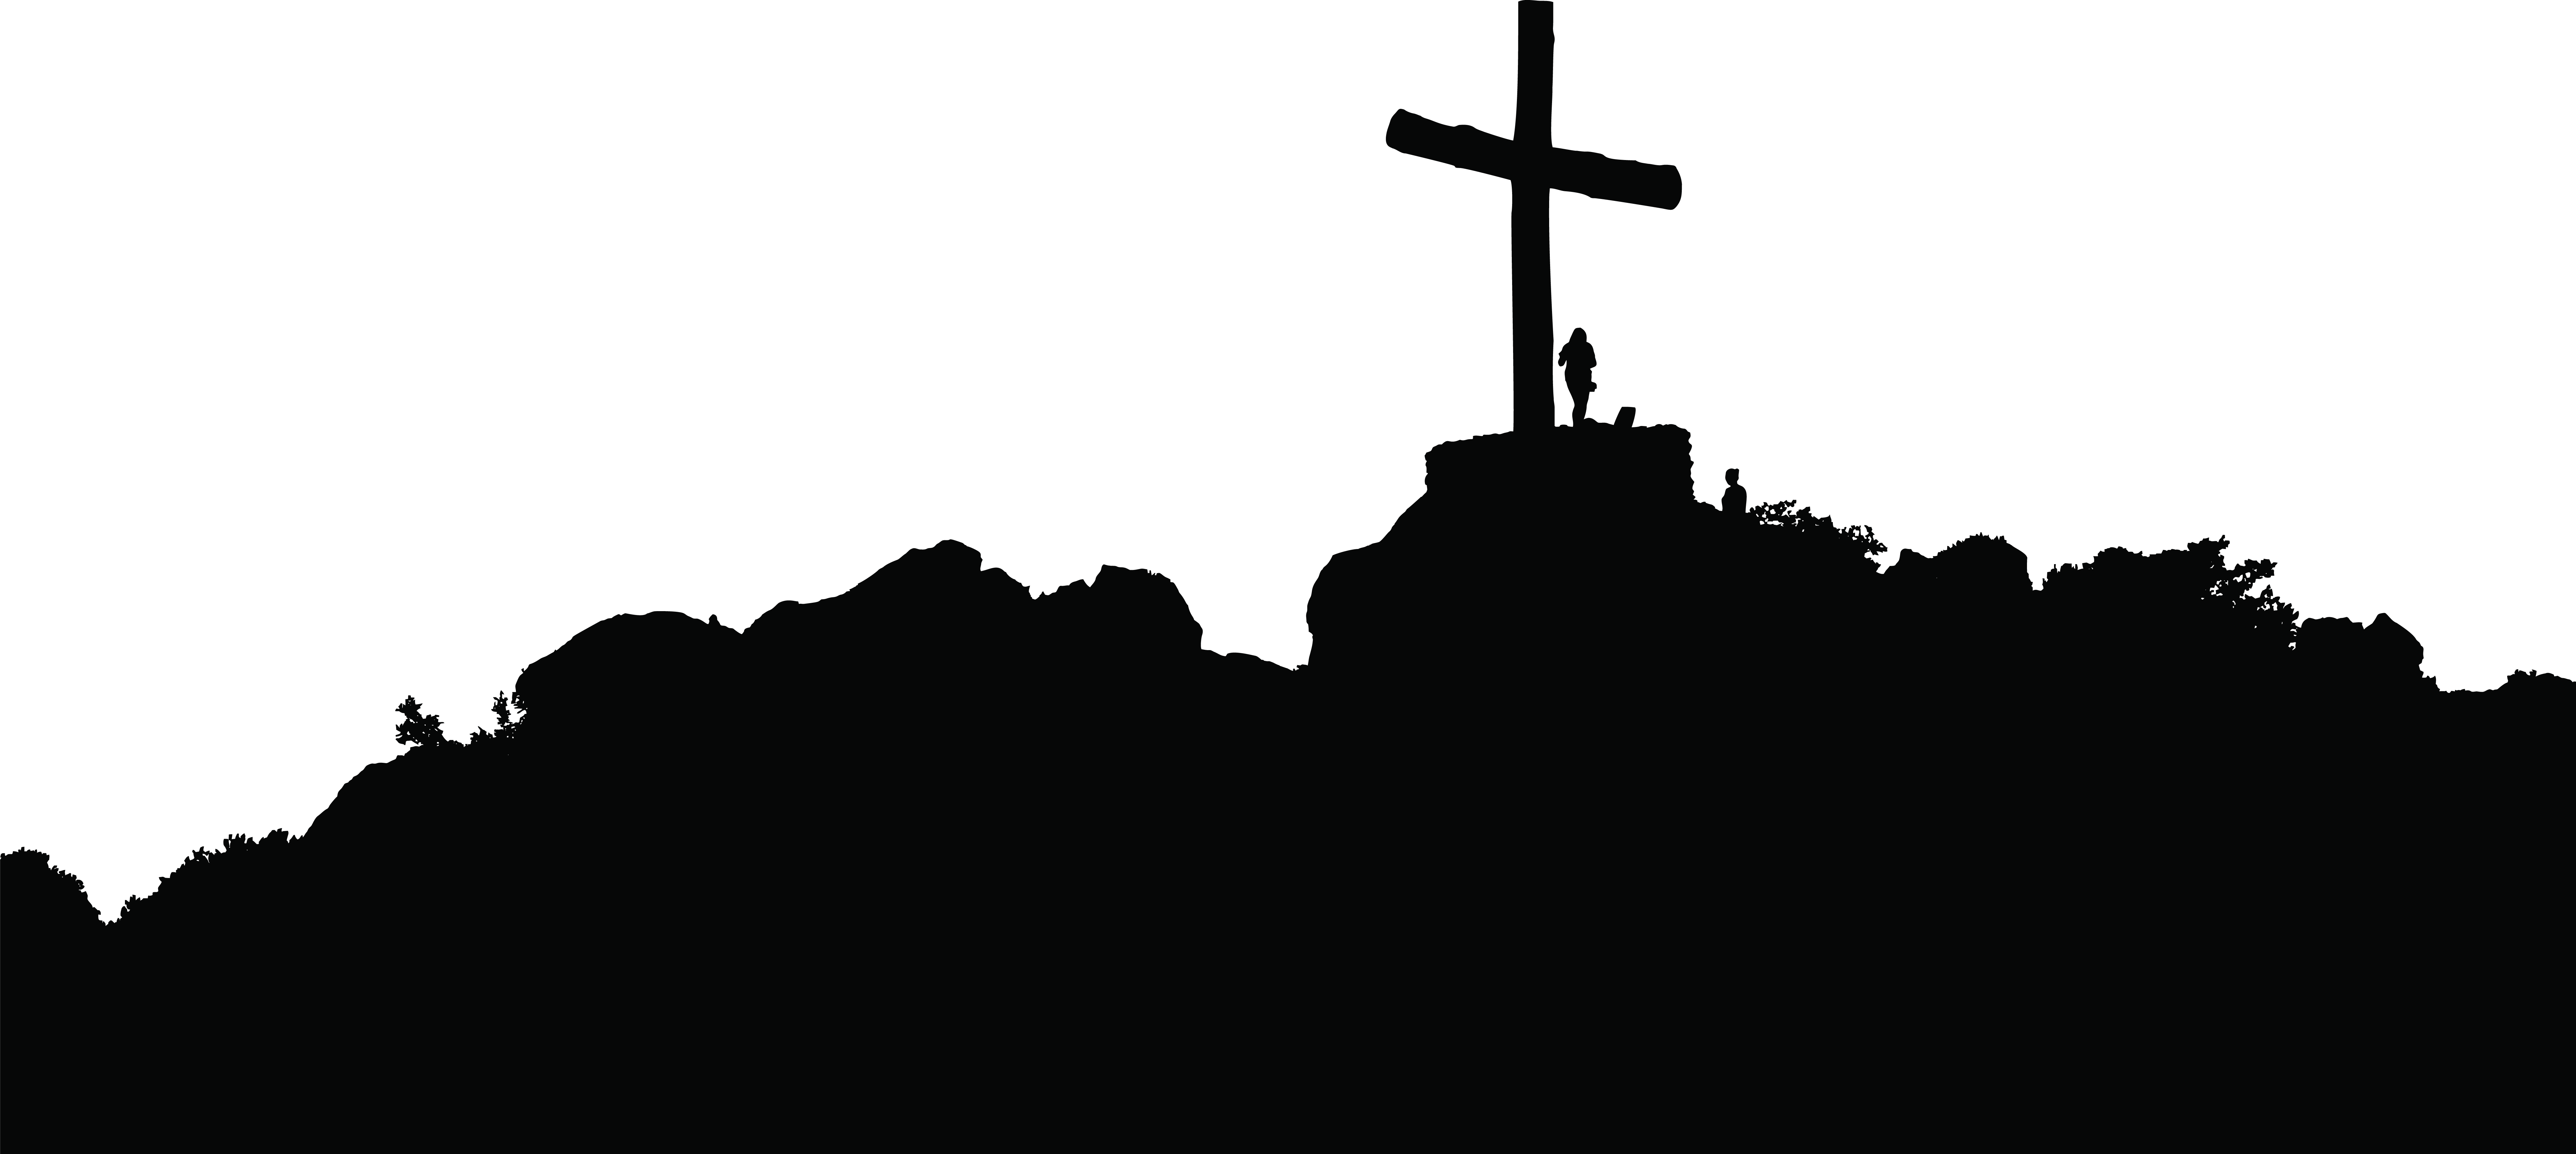 Silhouette Christian cross Clip art